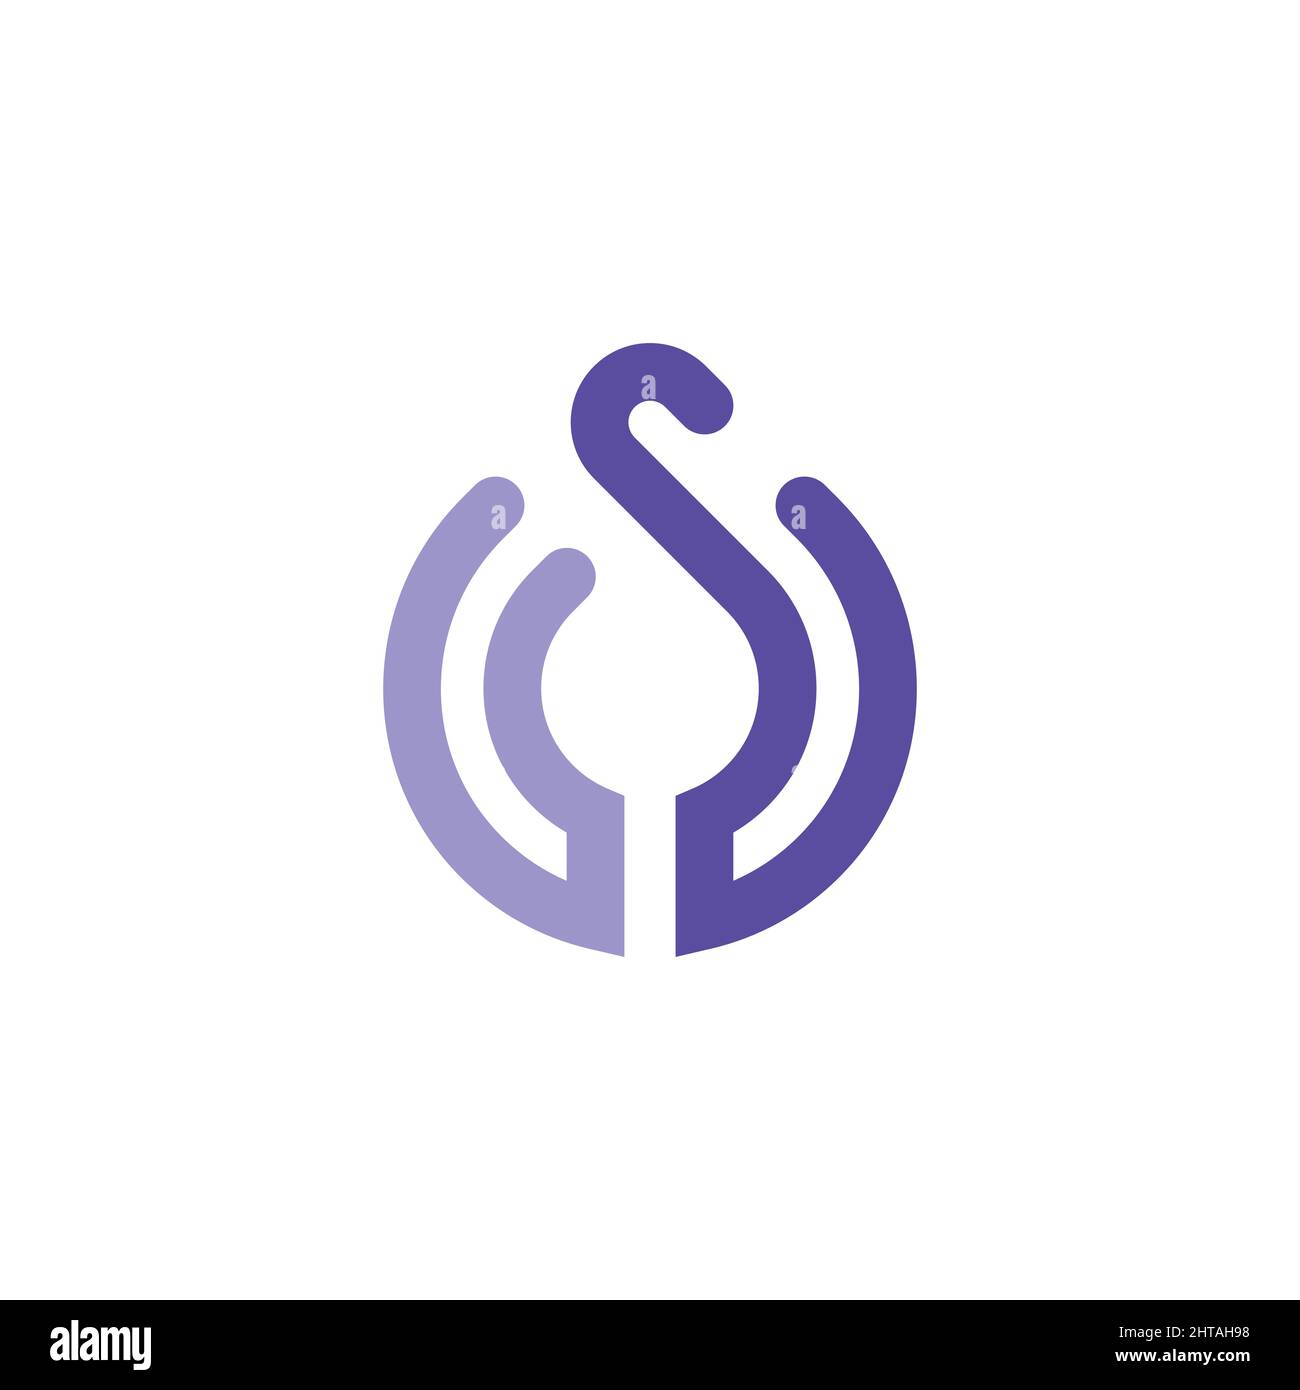 Initial Letter S Logo Design Inspiration Vektor-Vorlage Stock Vektor